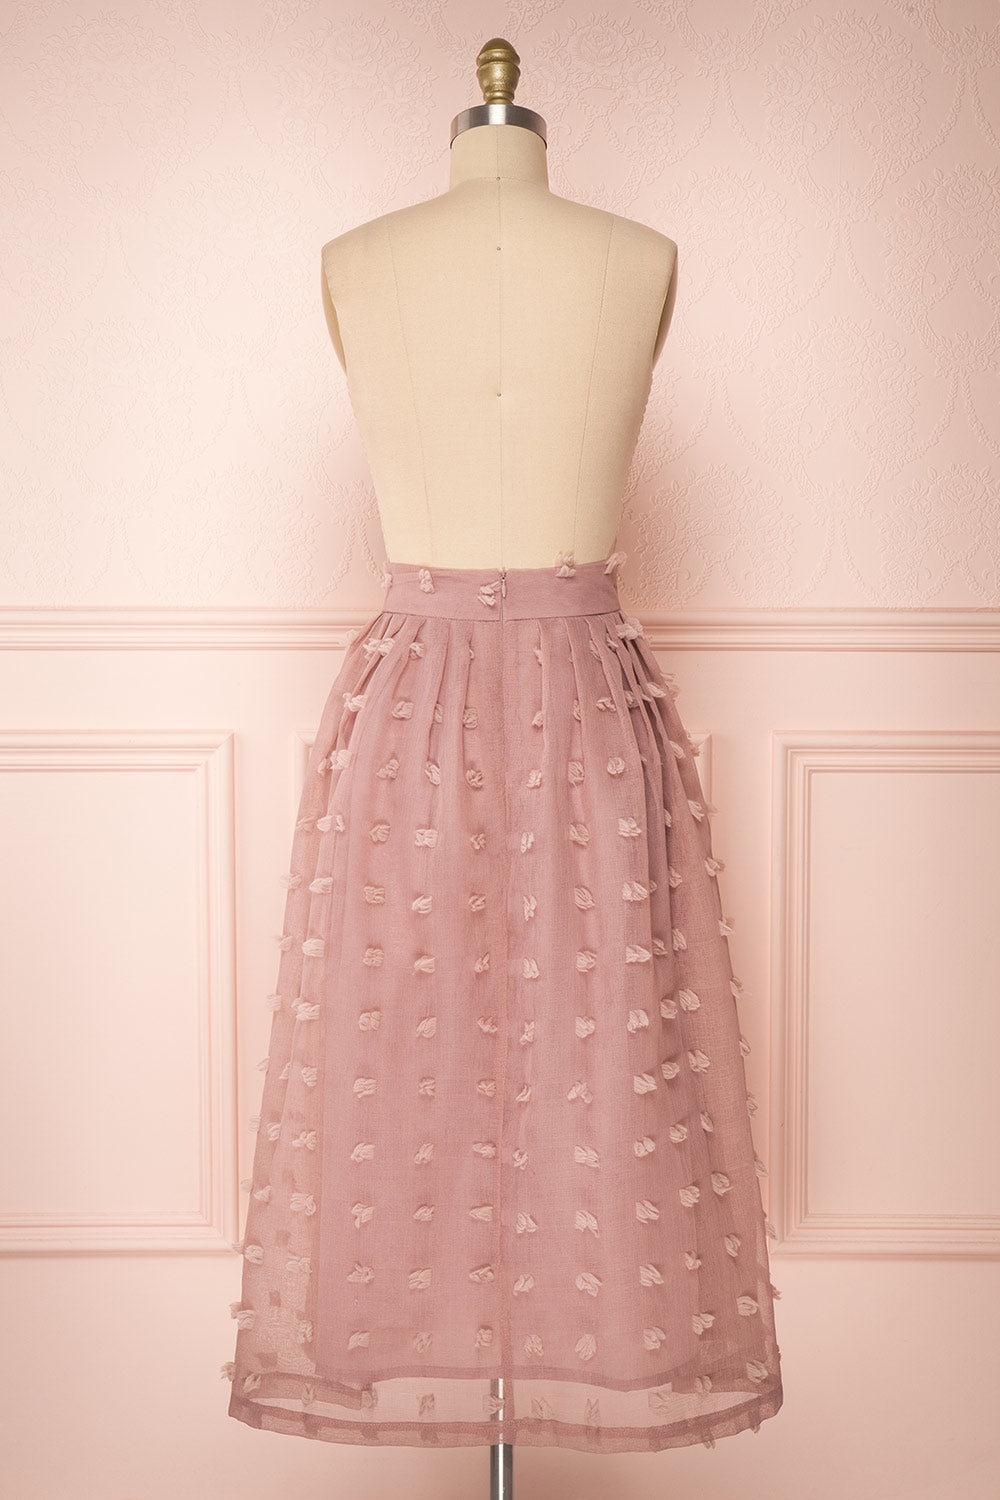 Flavie Rose Pink A-Line Skirt | Jupe Ligne A | Boutique 1861 back view 